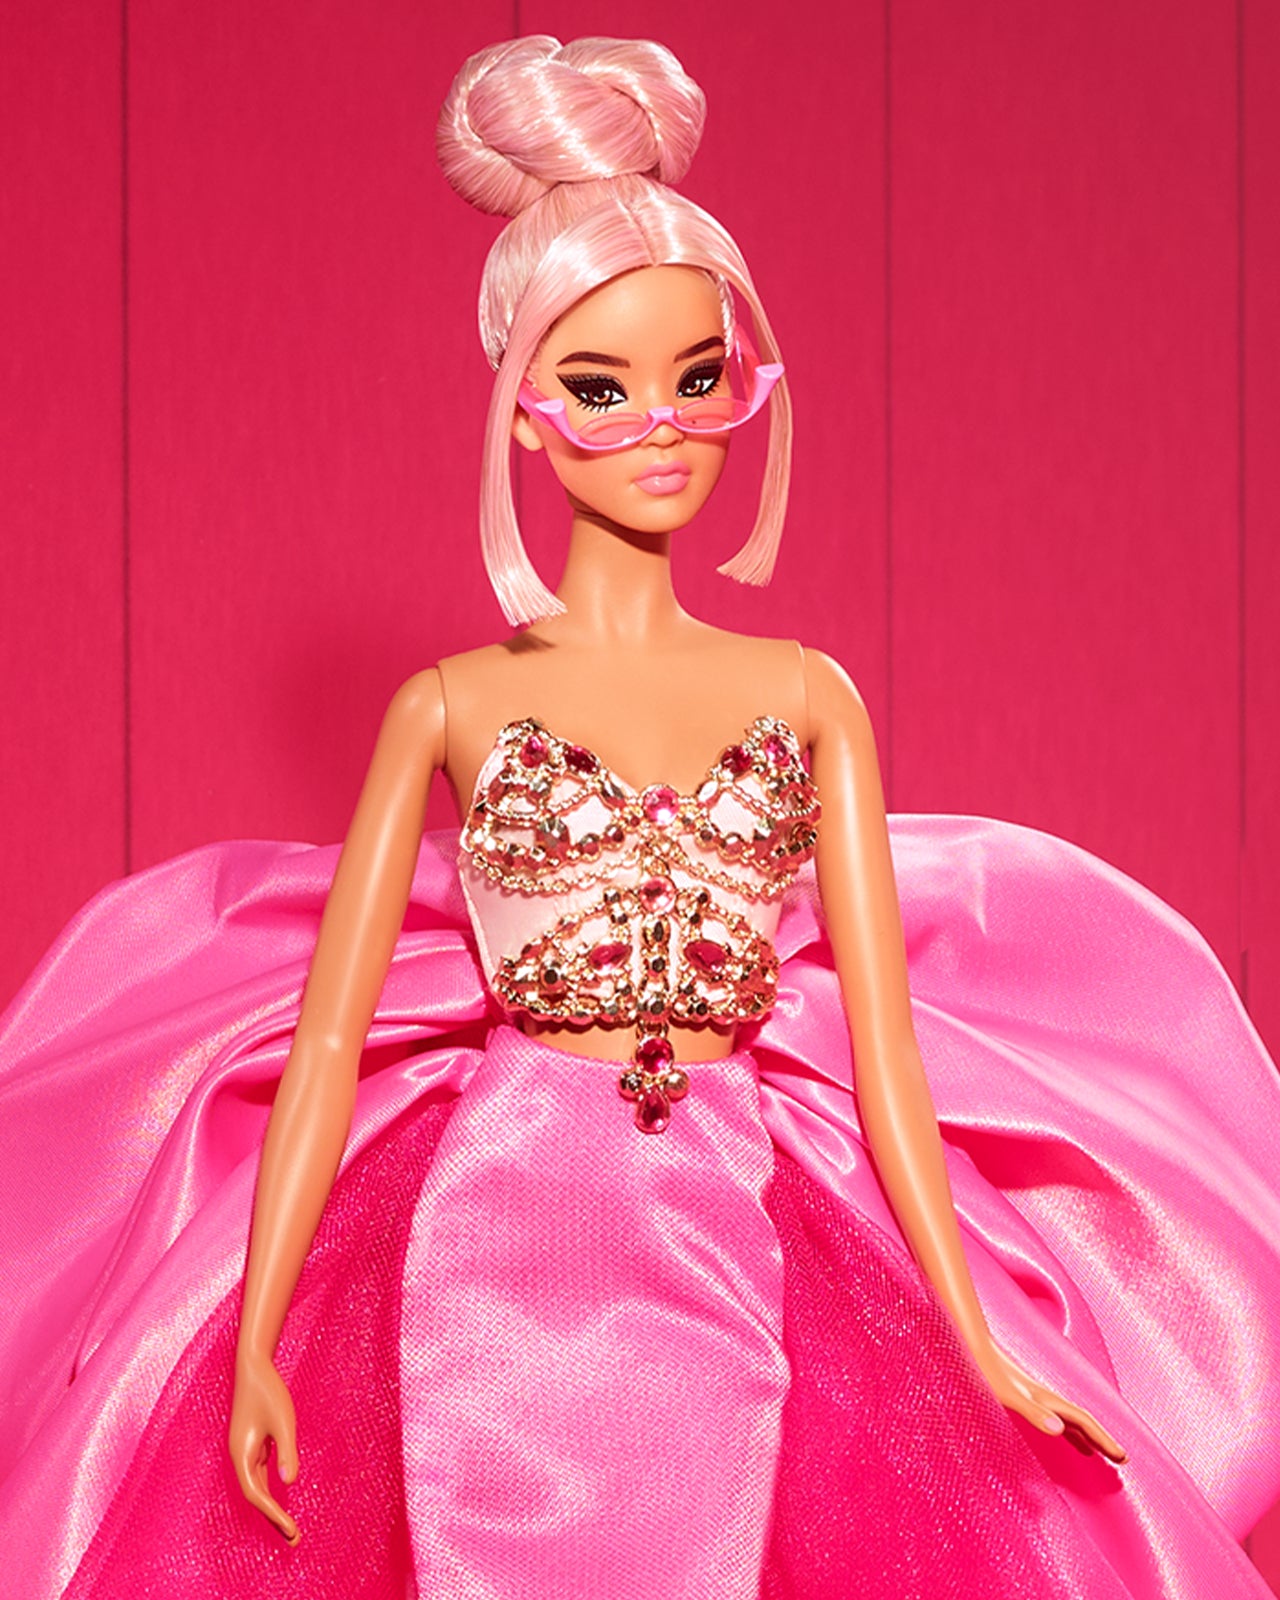 About Barbie Signature | Mattel Creations